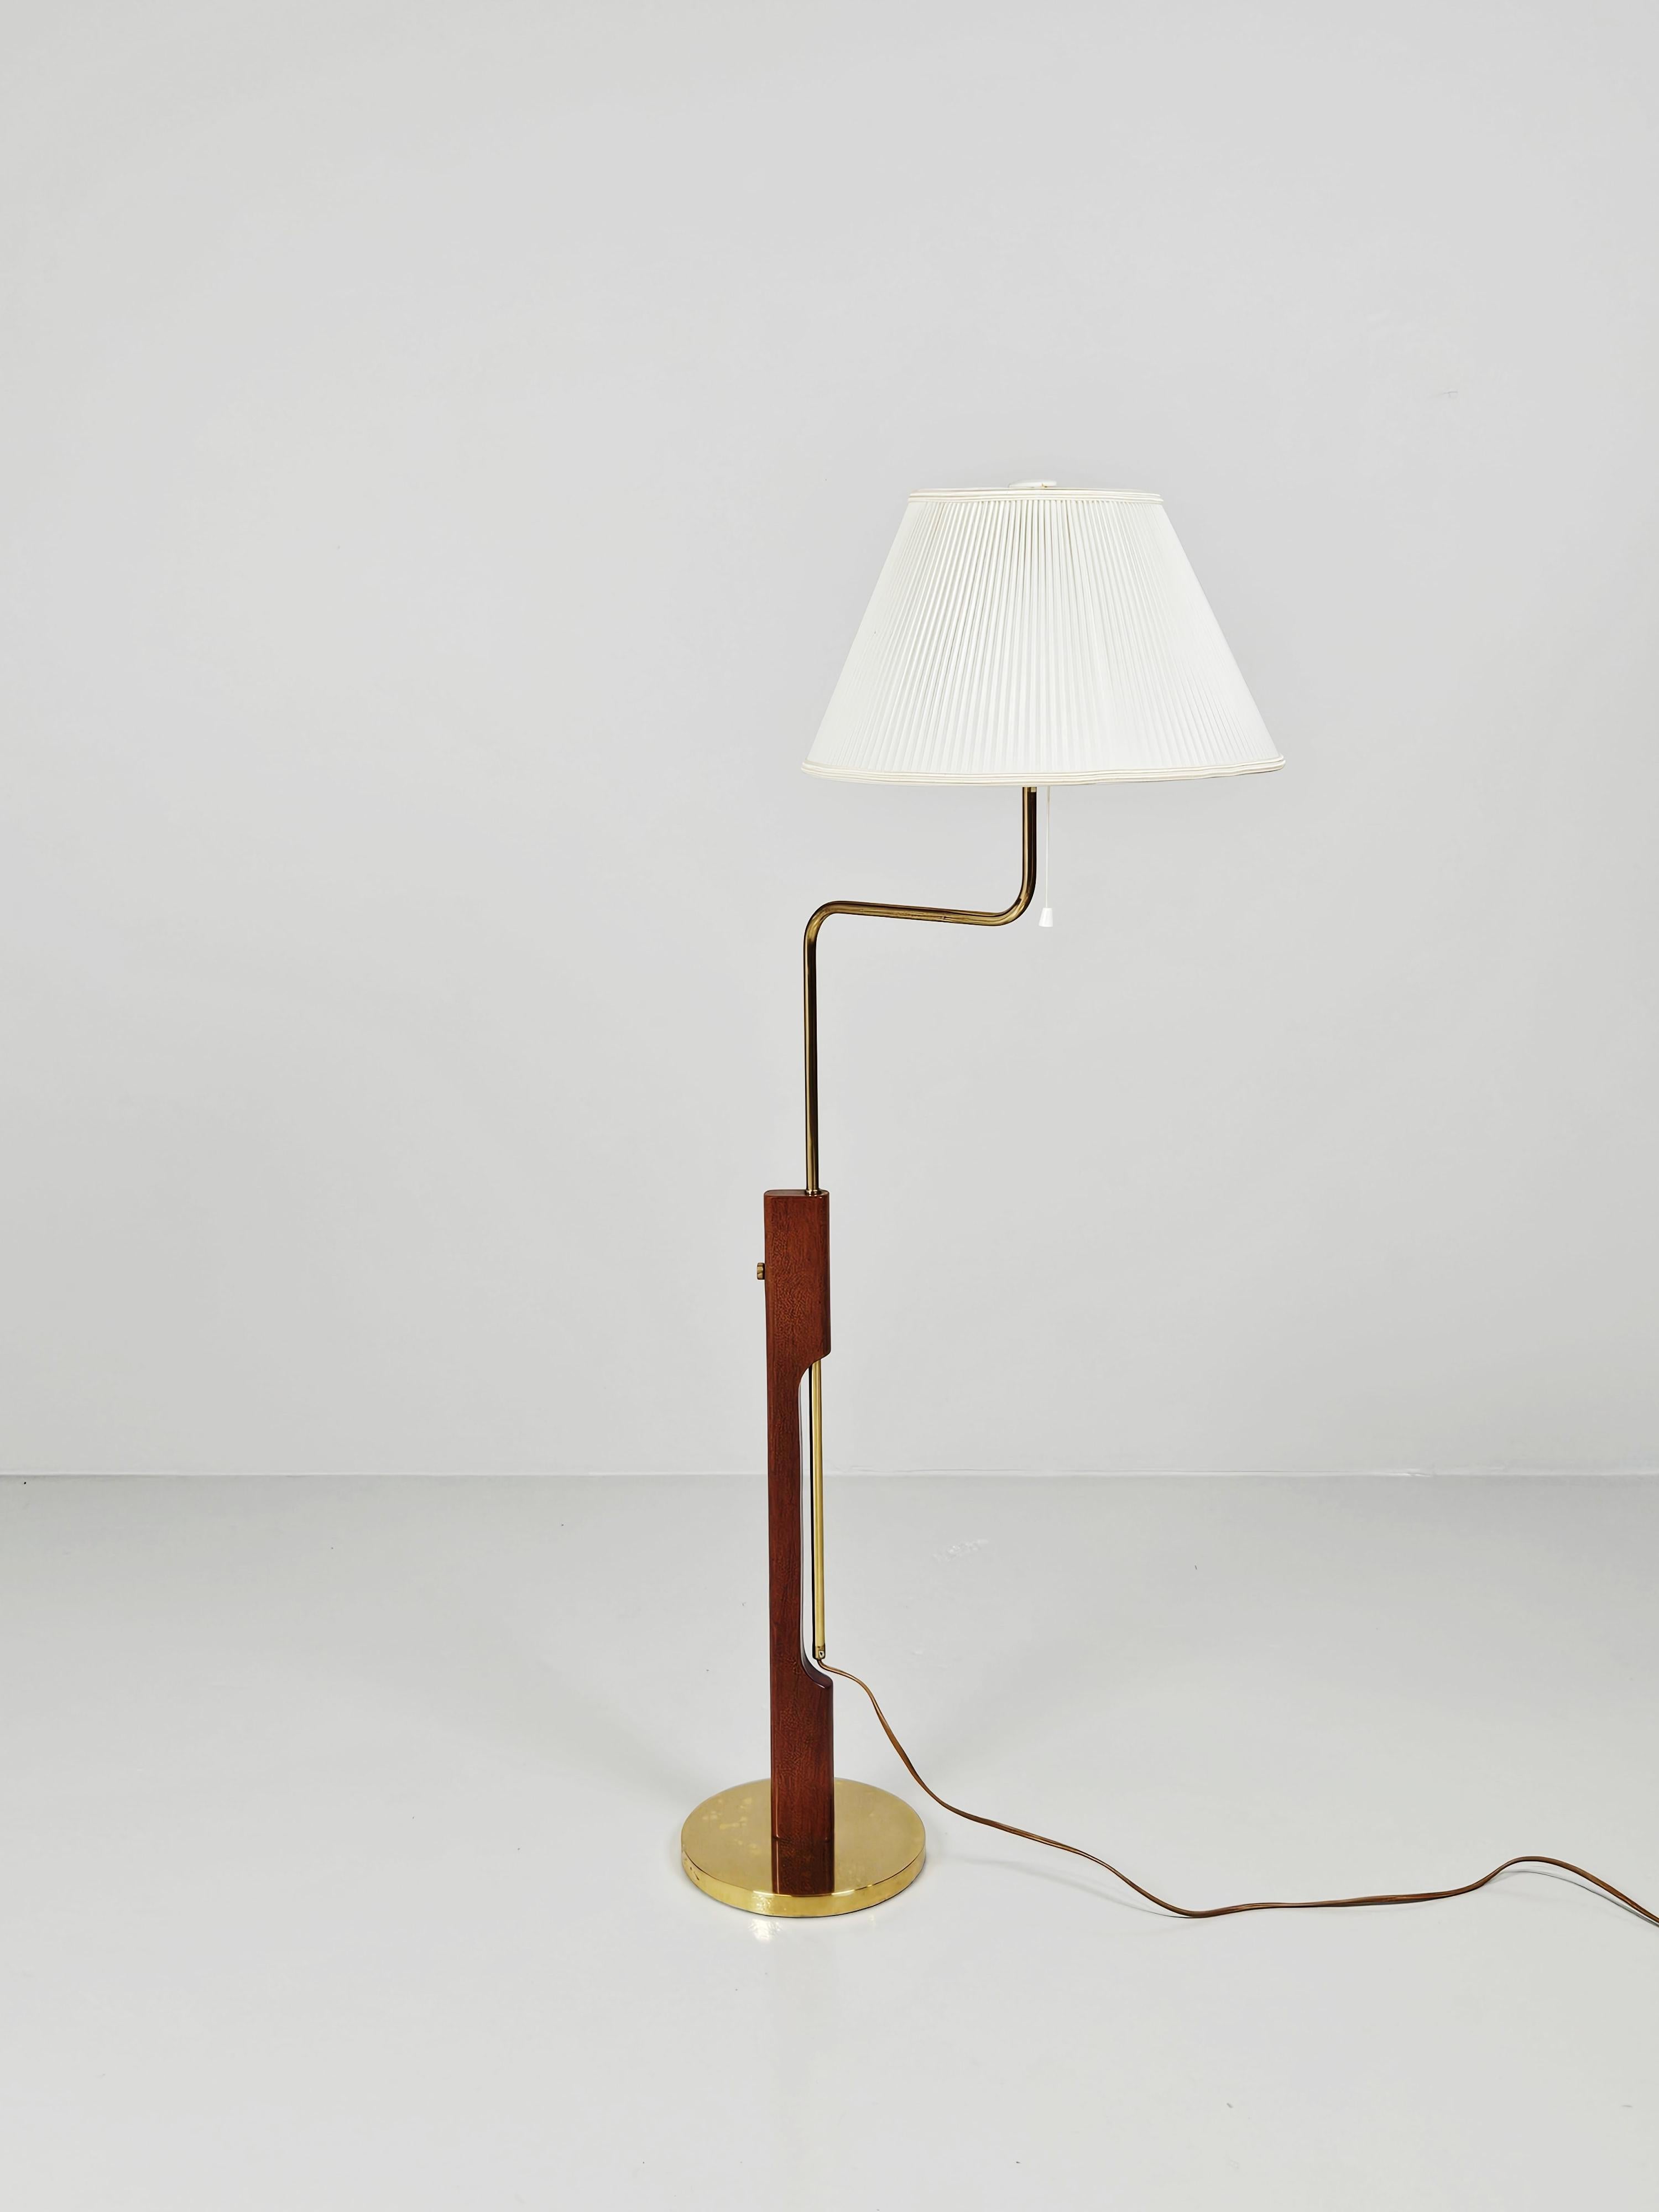 Adjustable floor lamp by Bergboms, model G-82A, teak and brass, Sweden, 1960s For Sale 1